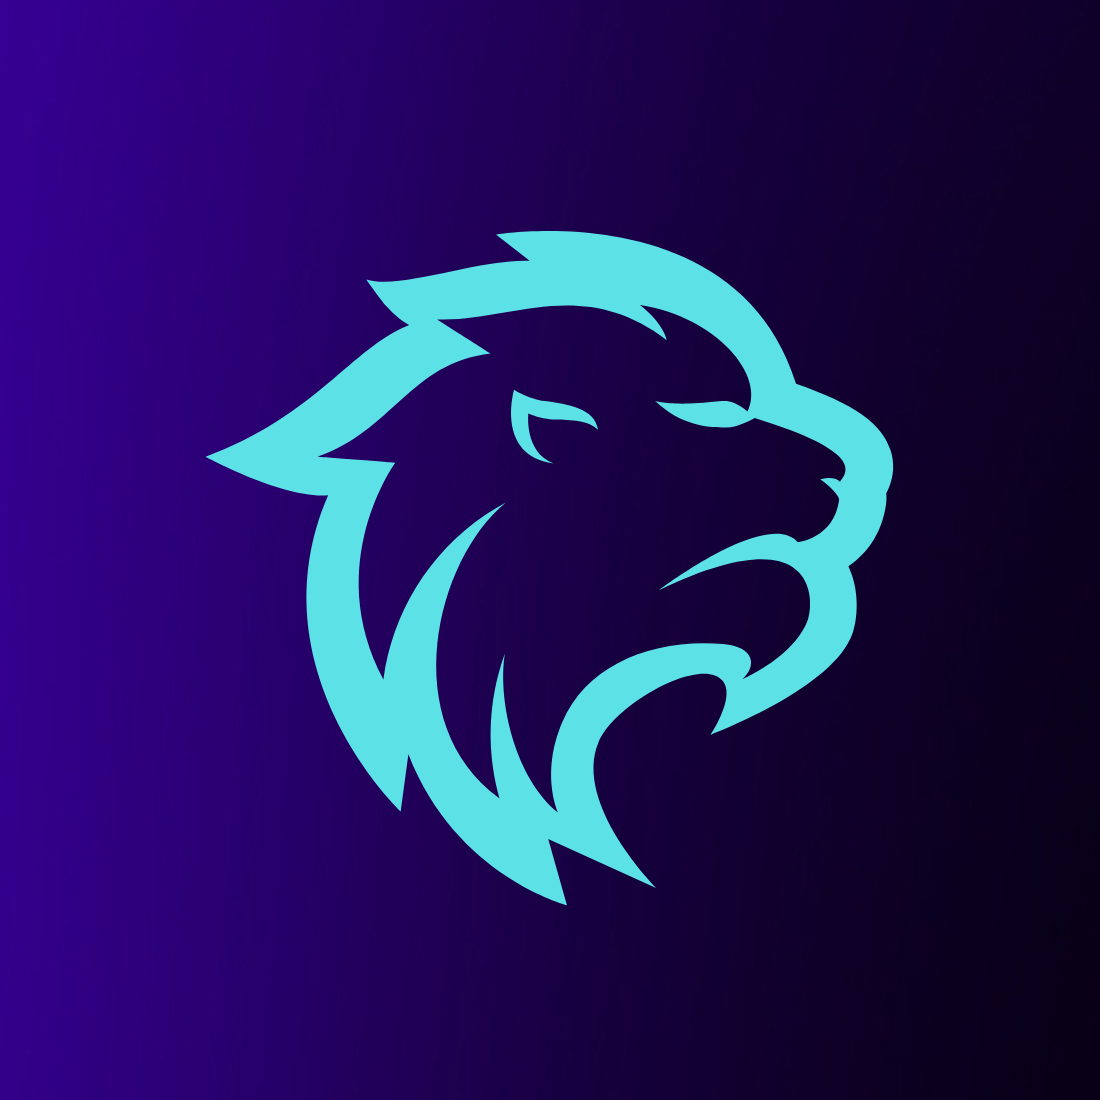 Lion Face Logo Design Template cover image.